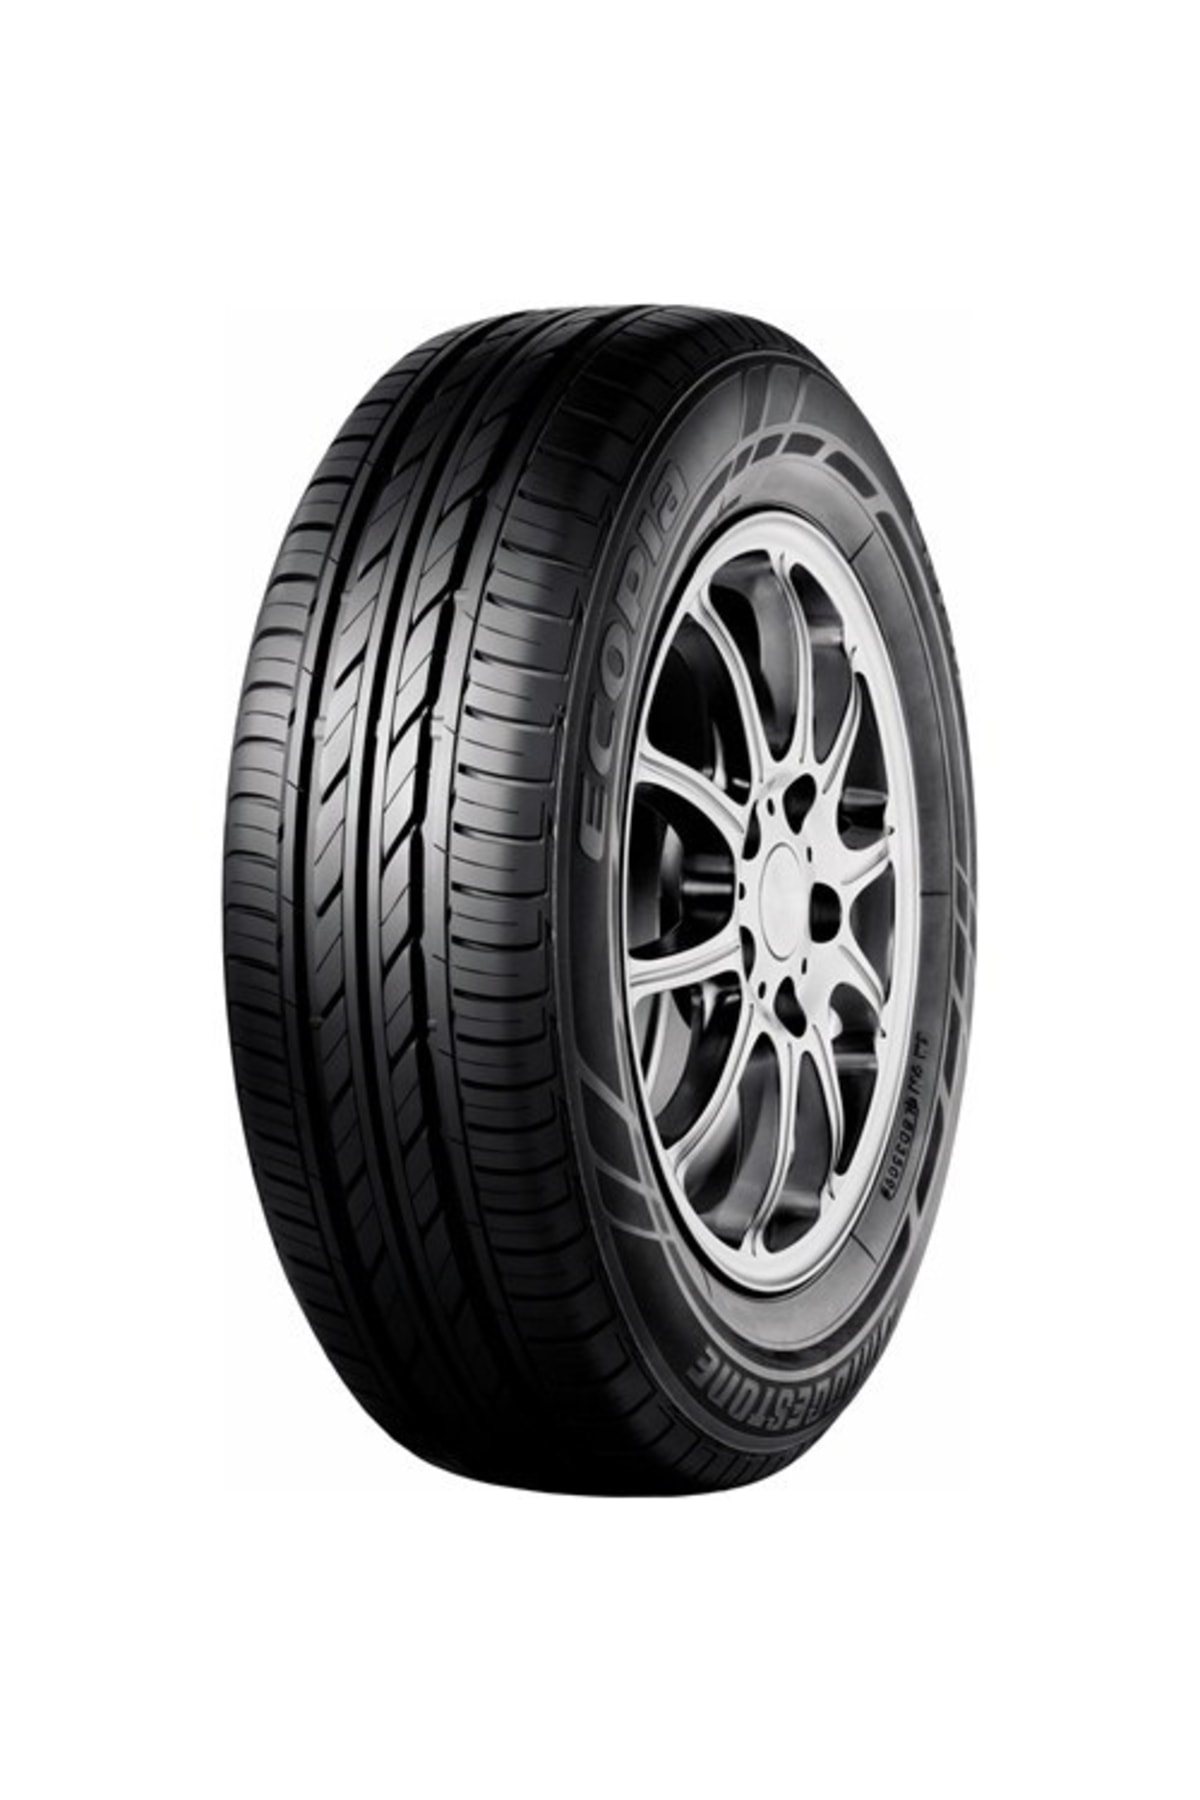 Bridgestone 195/65r15 91h Ecopia Ep150 (yaz) (2022)